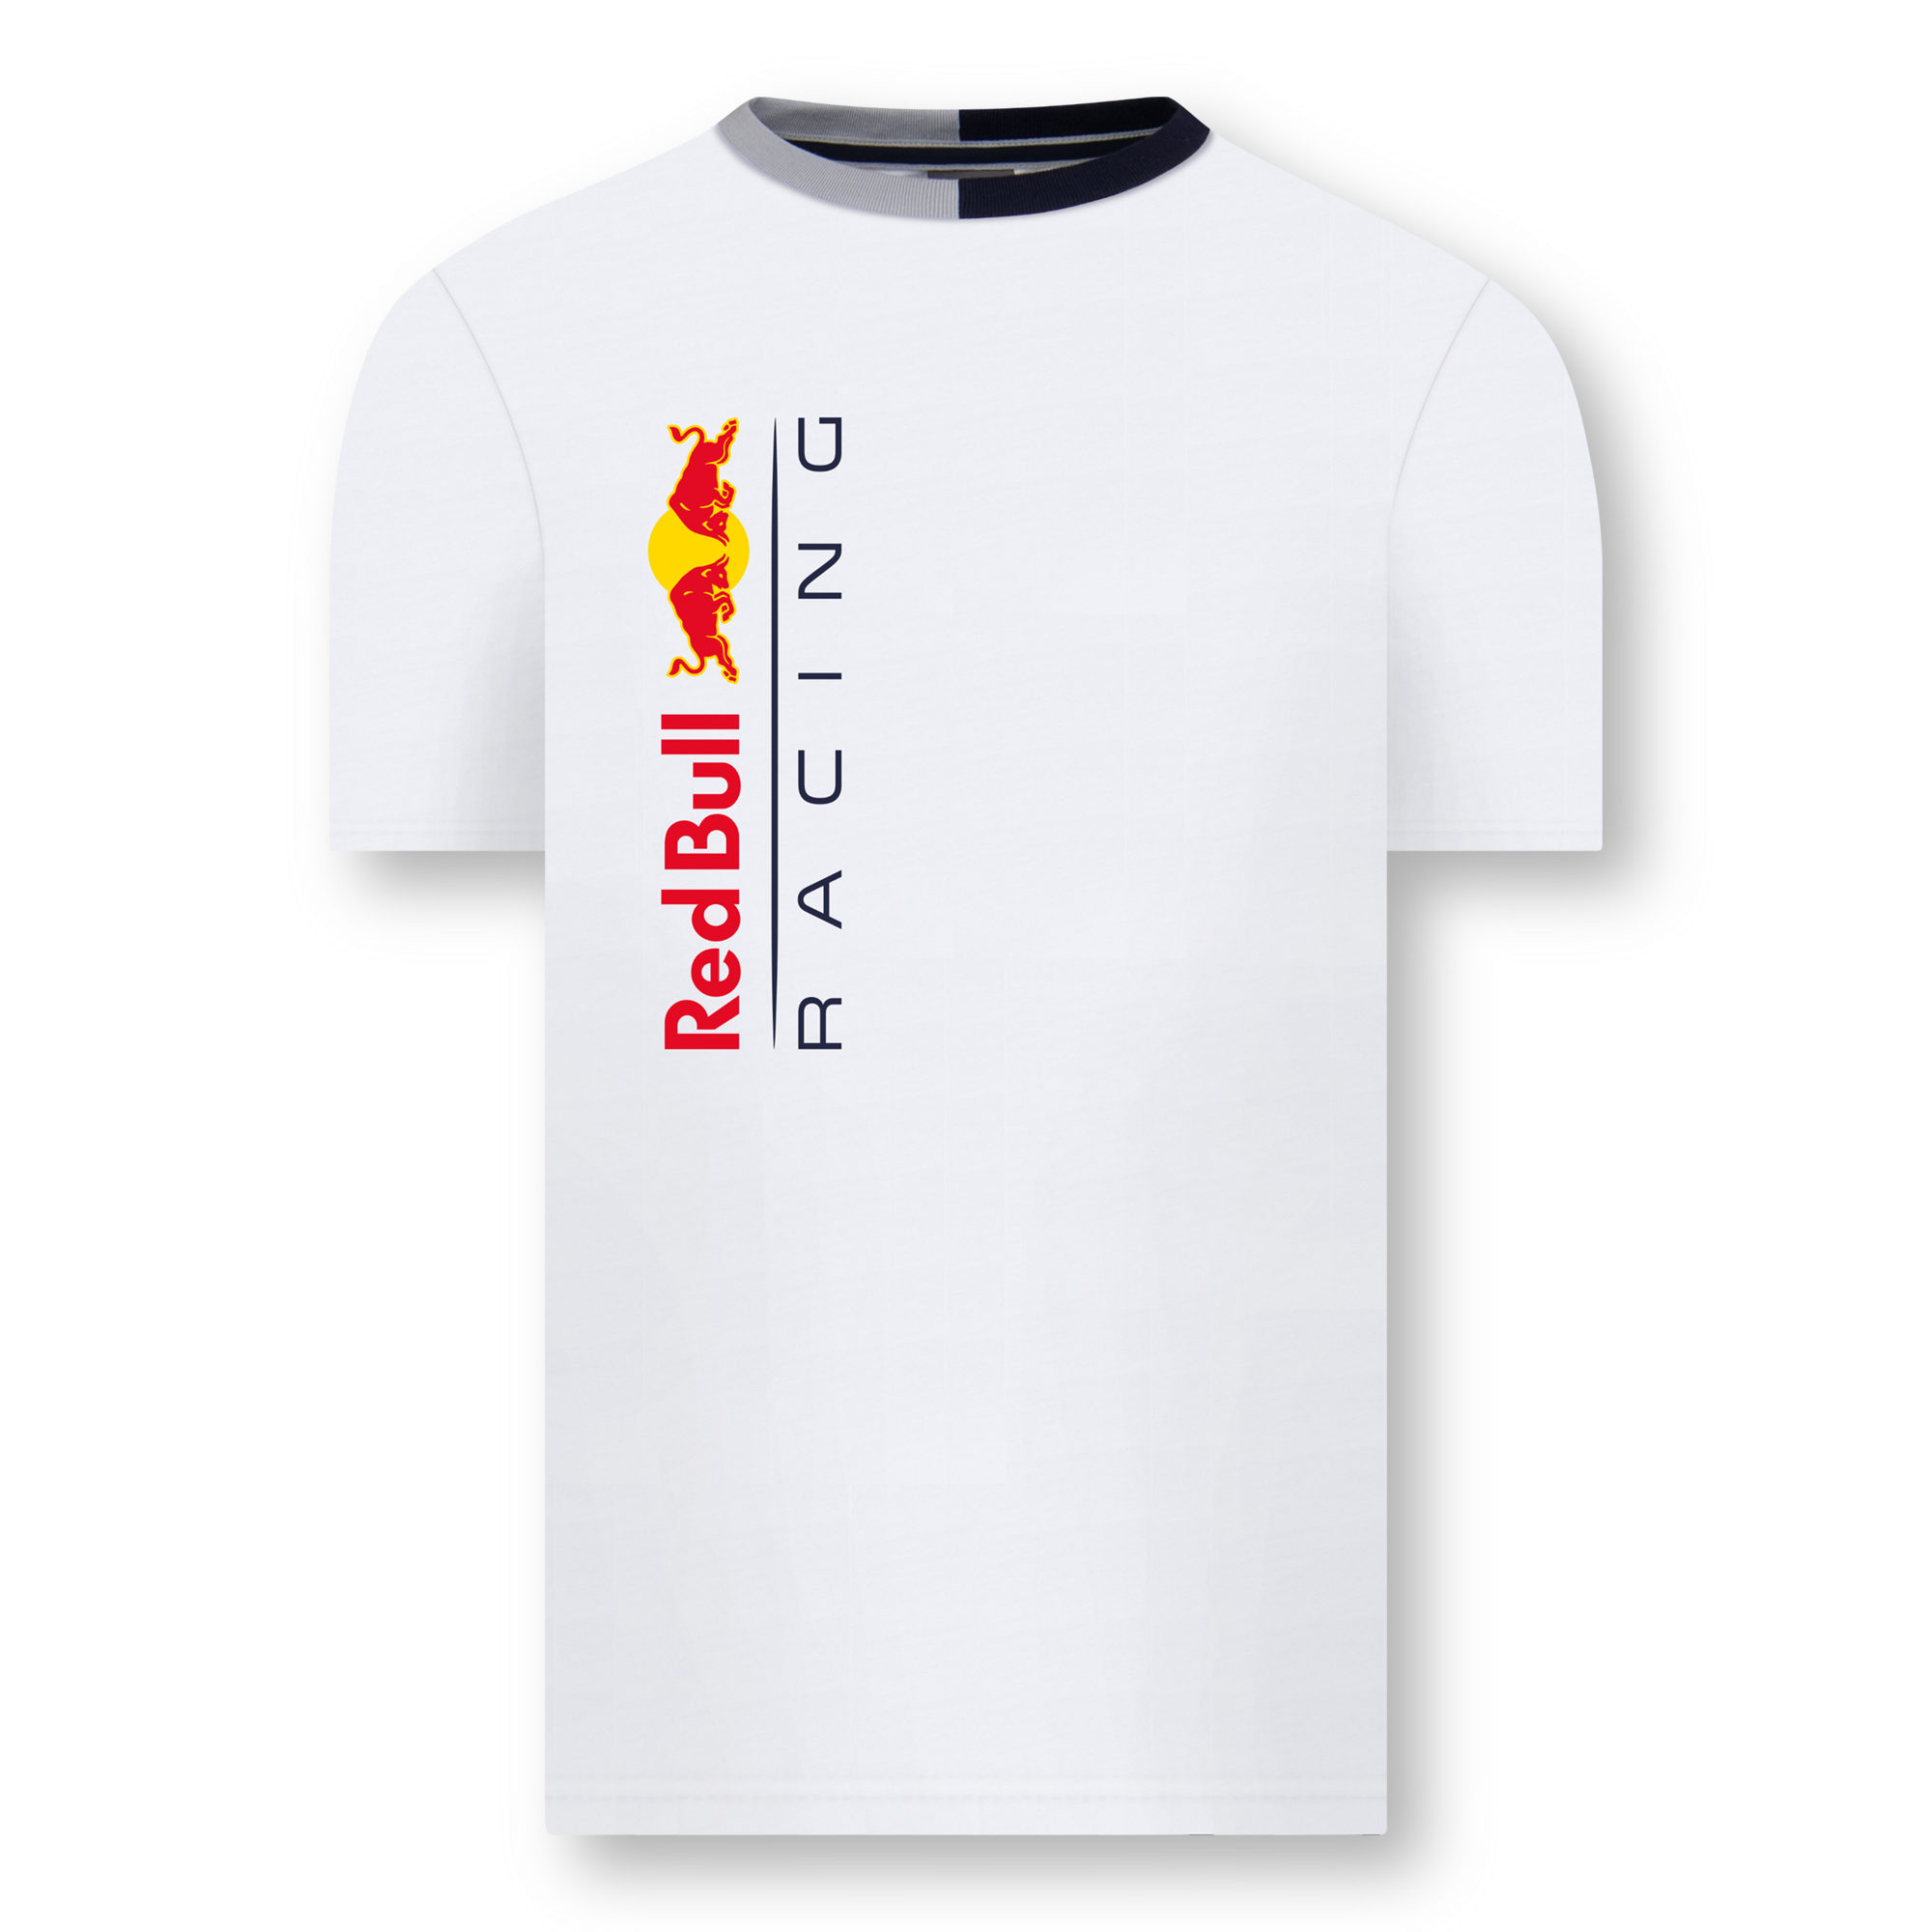 RedBull racing Tshirt white, 36,10 €